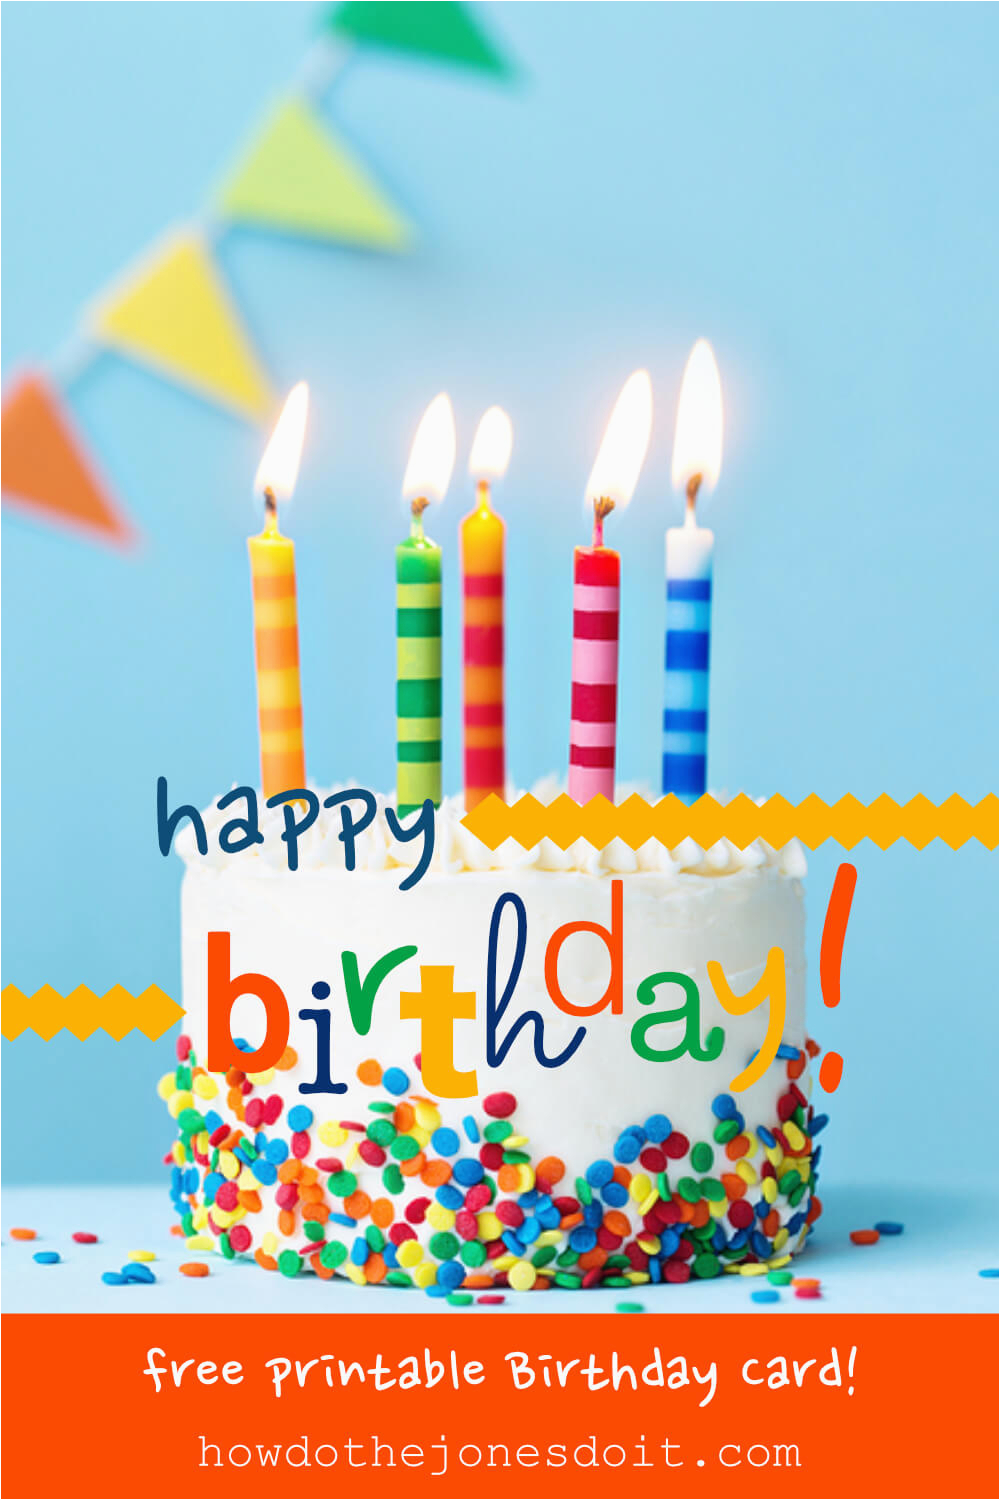 make-a-free-birthday-card-online-birthdaybuzz